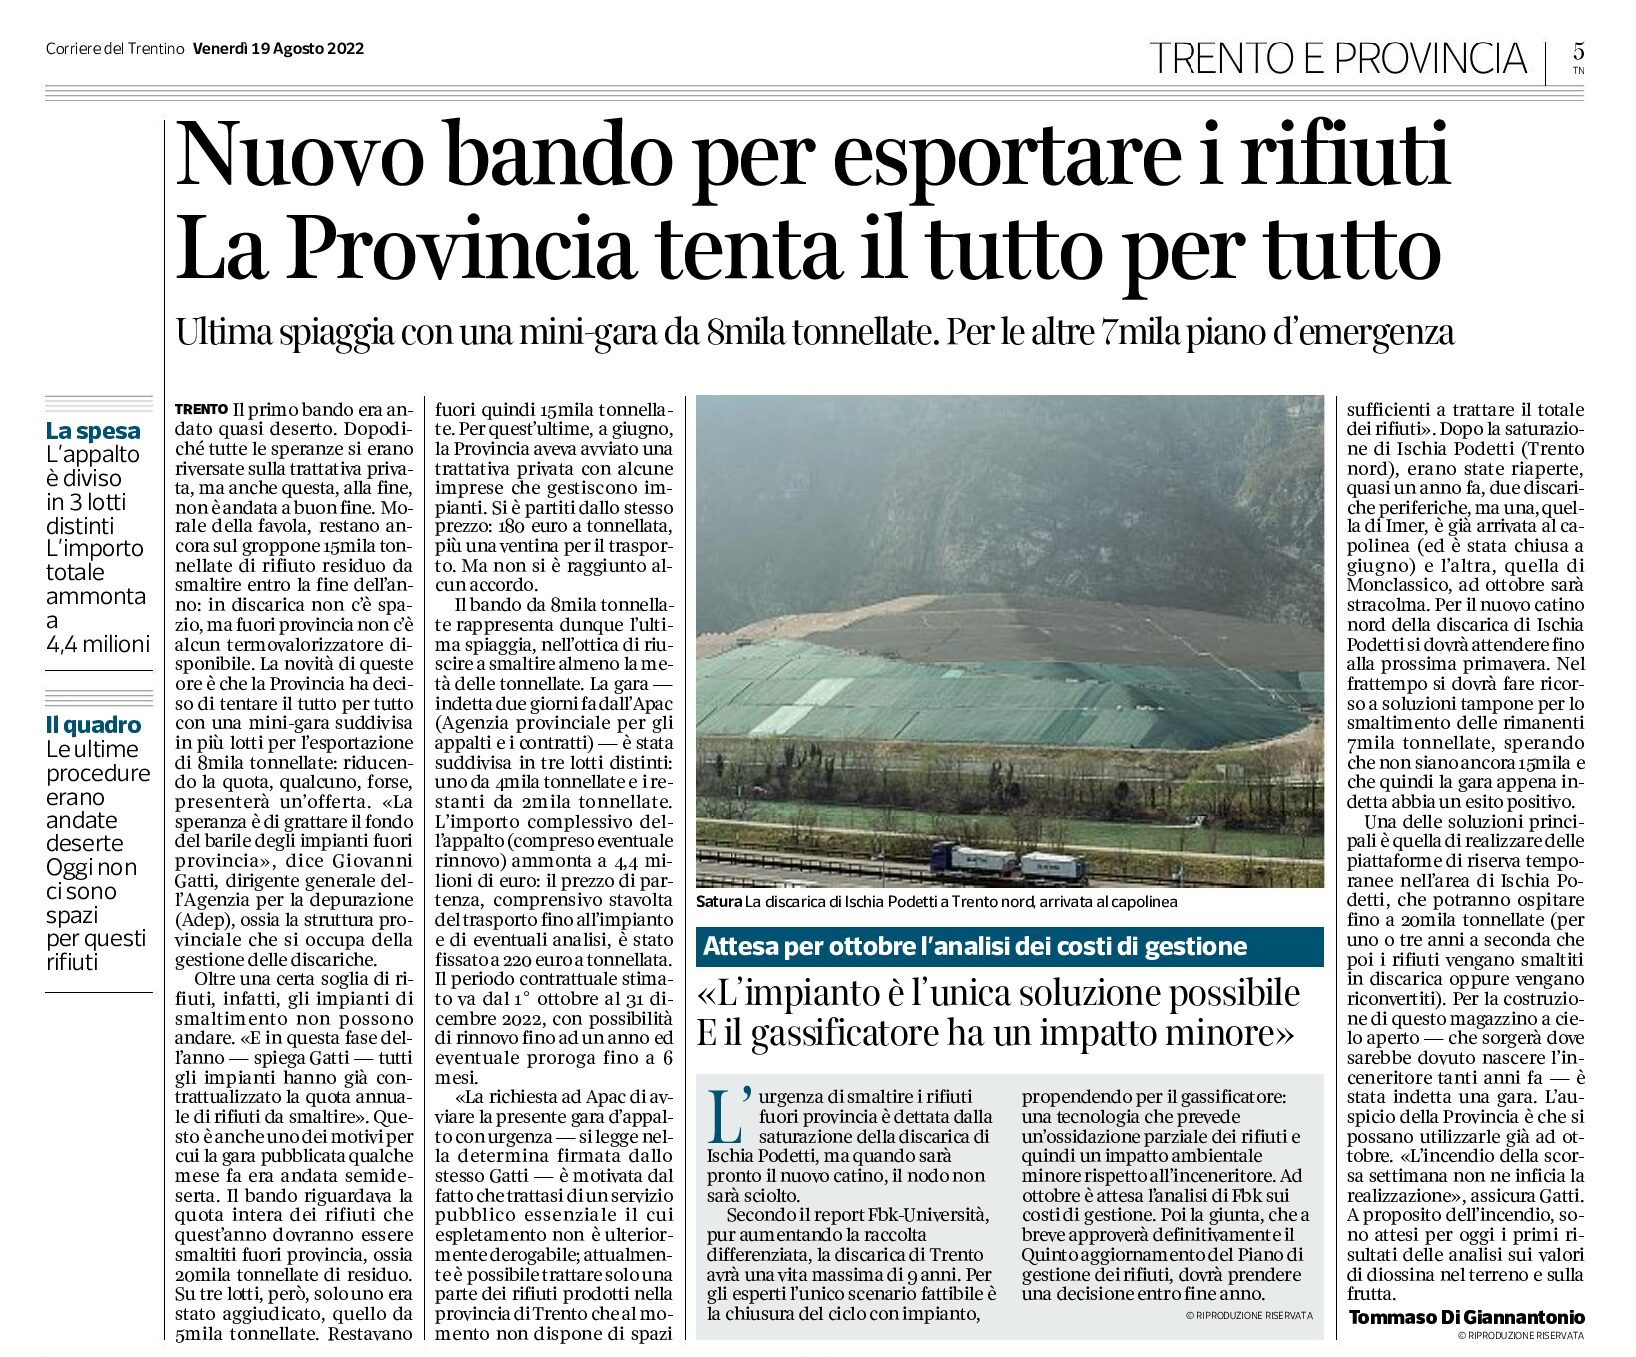 Trentino, rifiuti: nuovo bando per esportarli